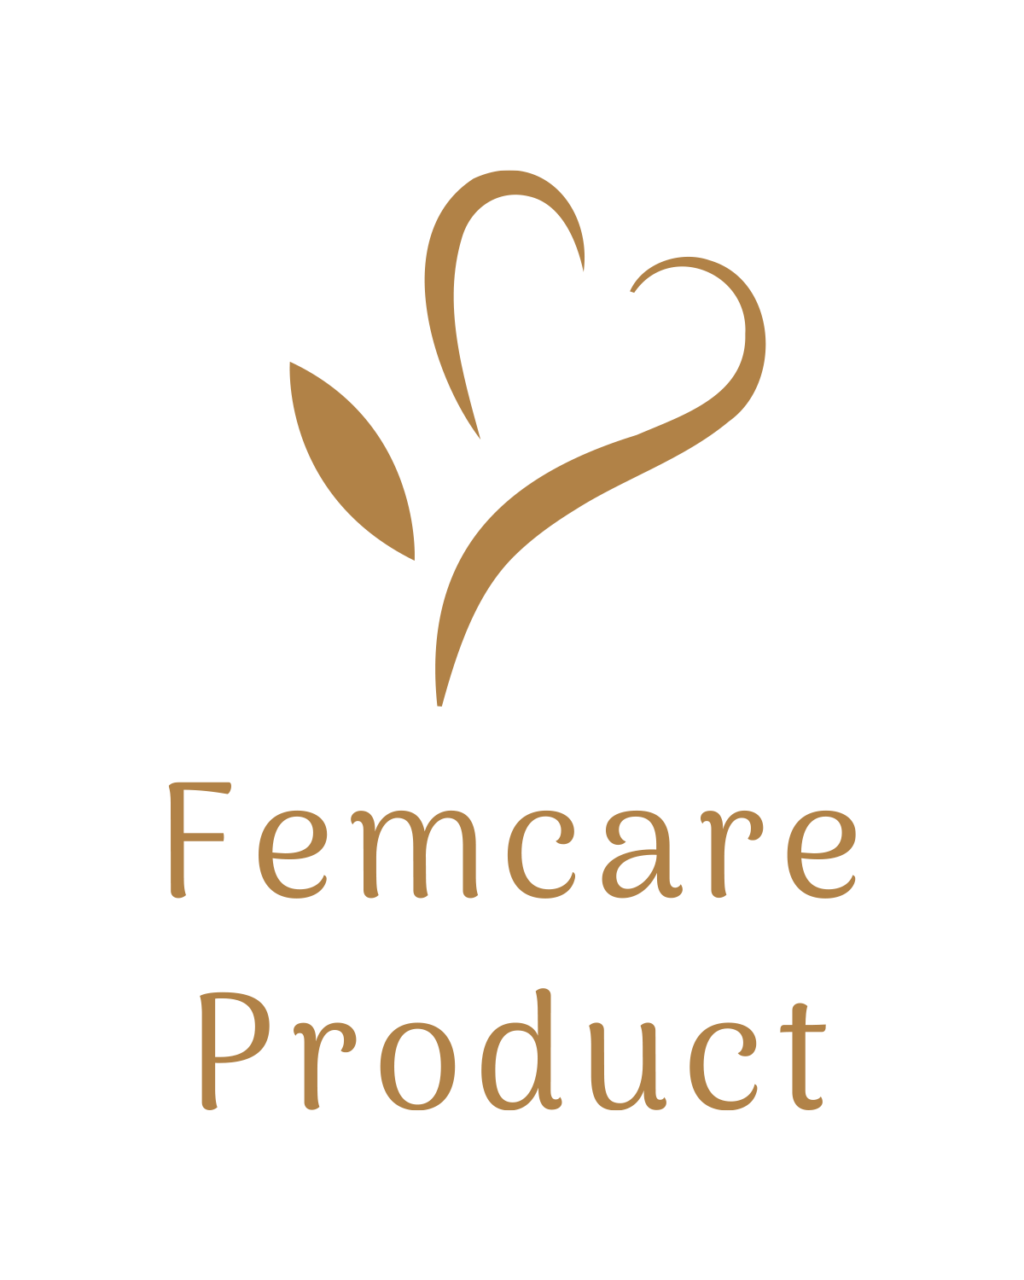 Femcare Product